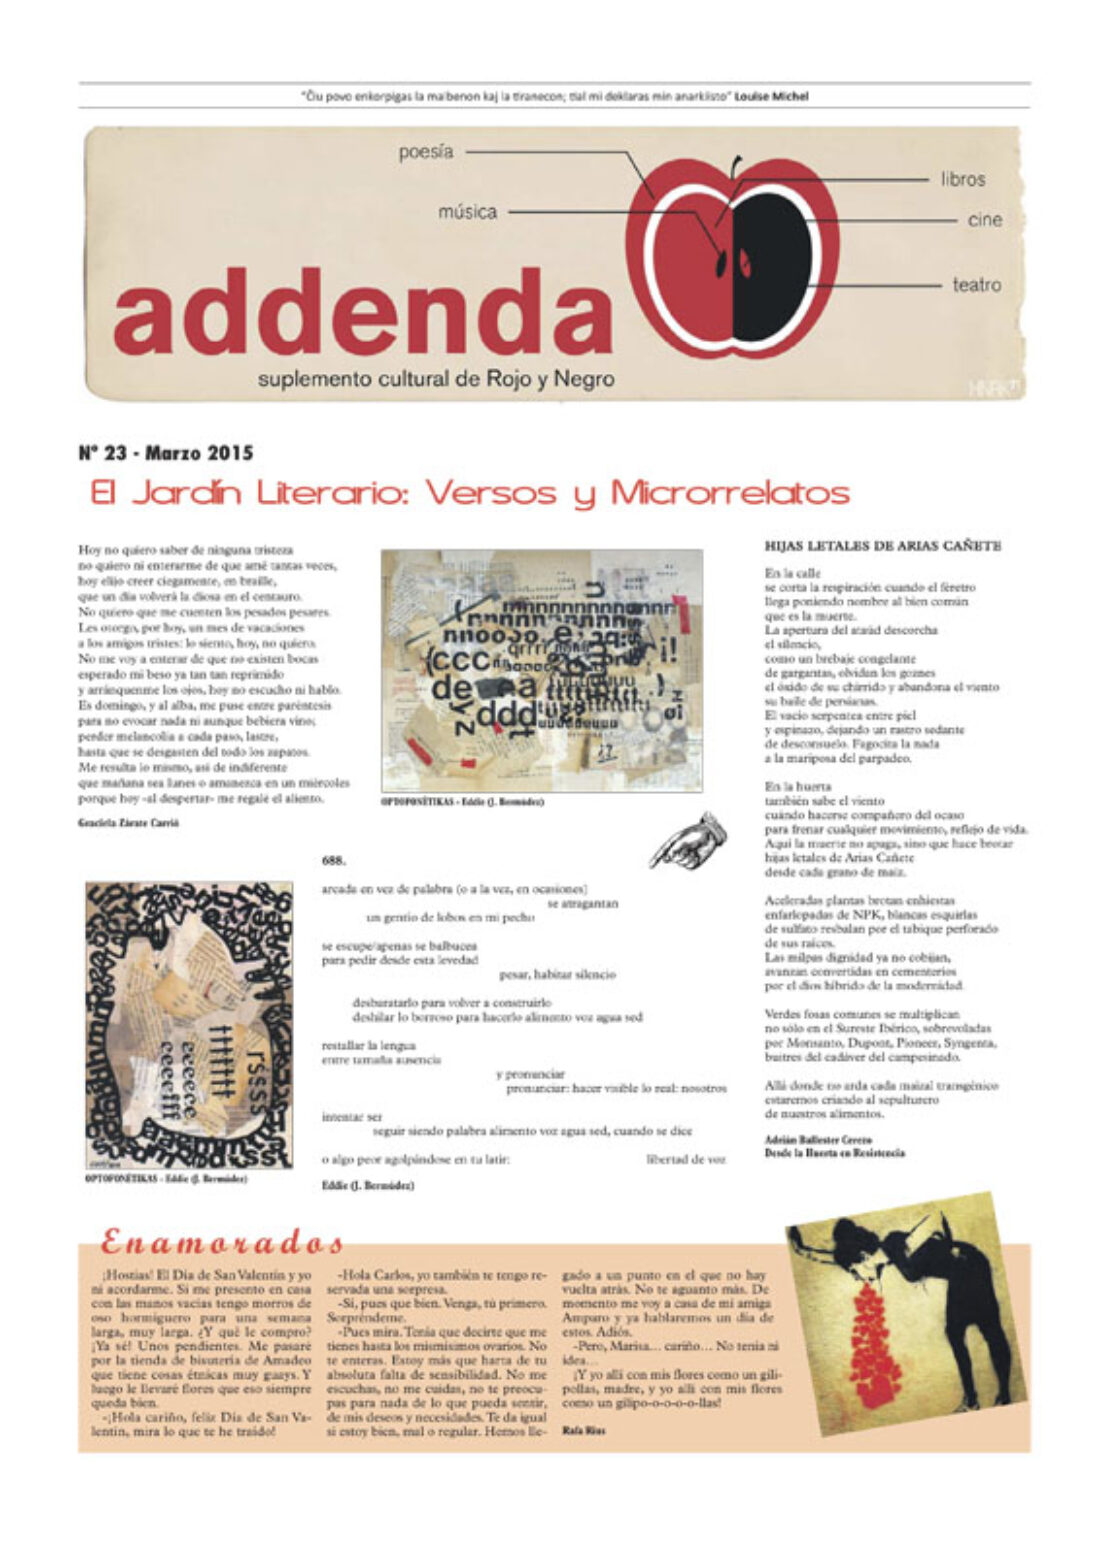 Addenda, suplemento cultural del RyN – Nº 23, marzo 2015